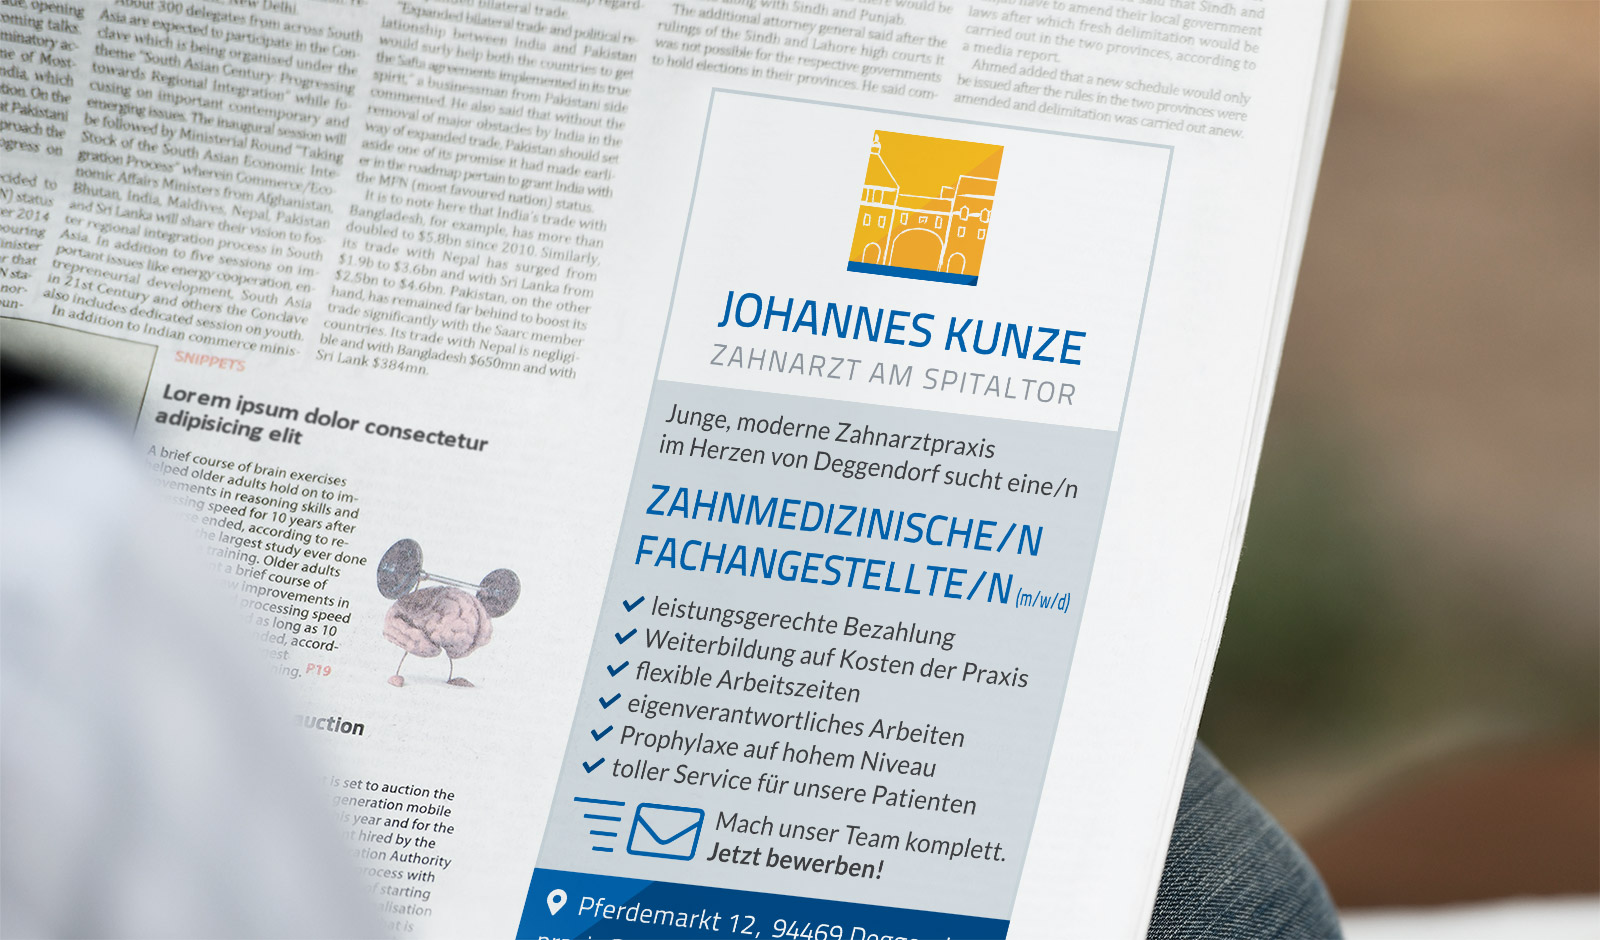 Zahnarzt am Spitaltor Johannes Kunze in Deggendorf, Zeitungsanzeige